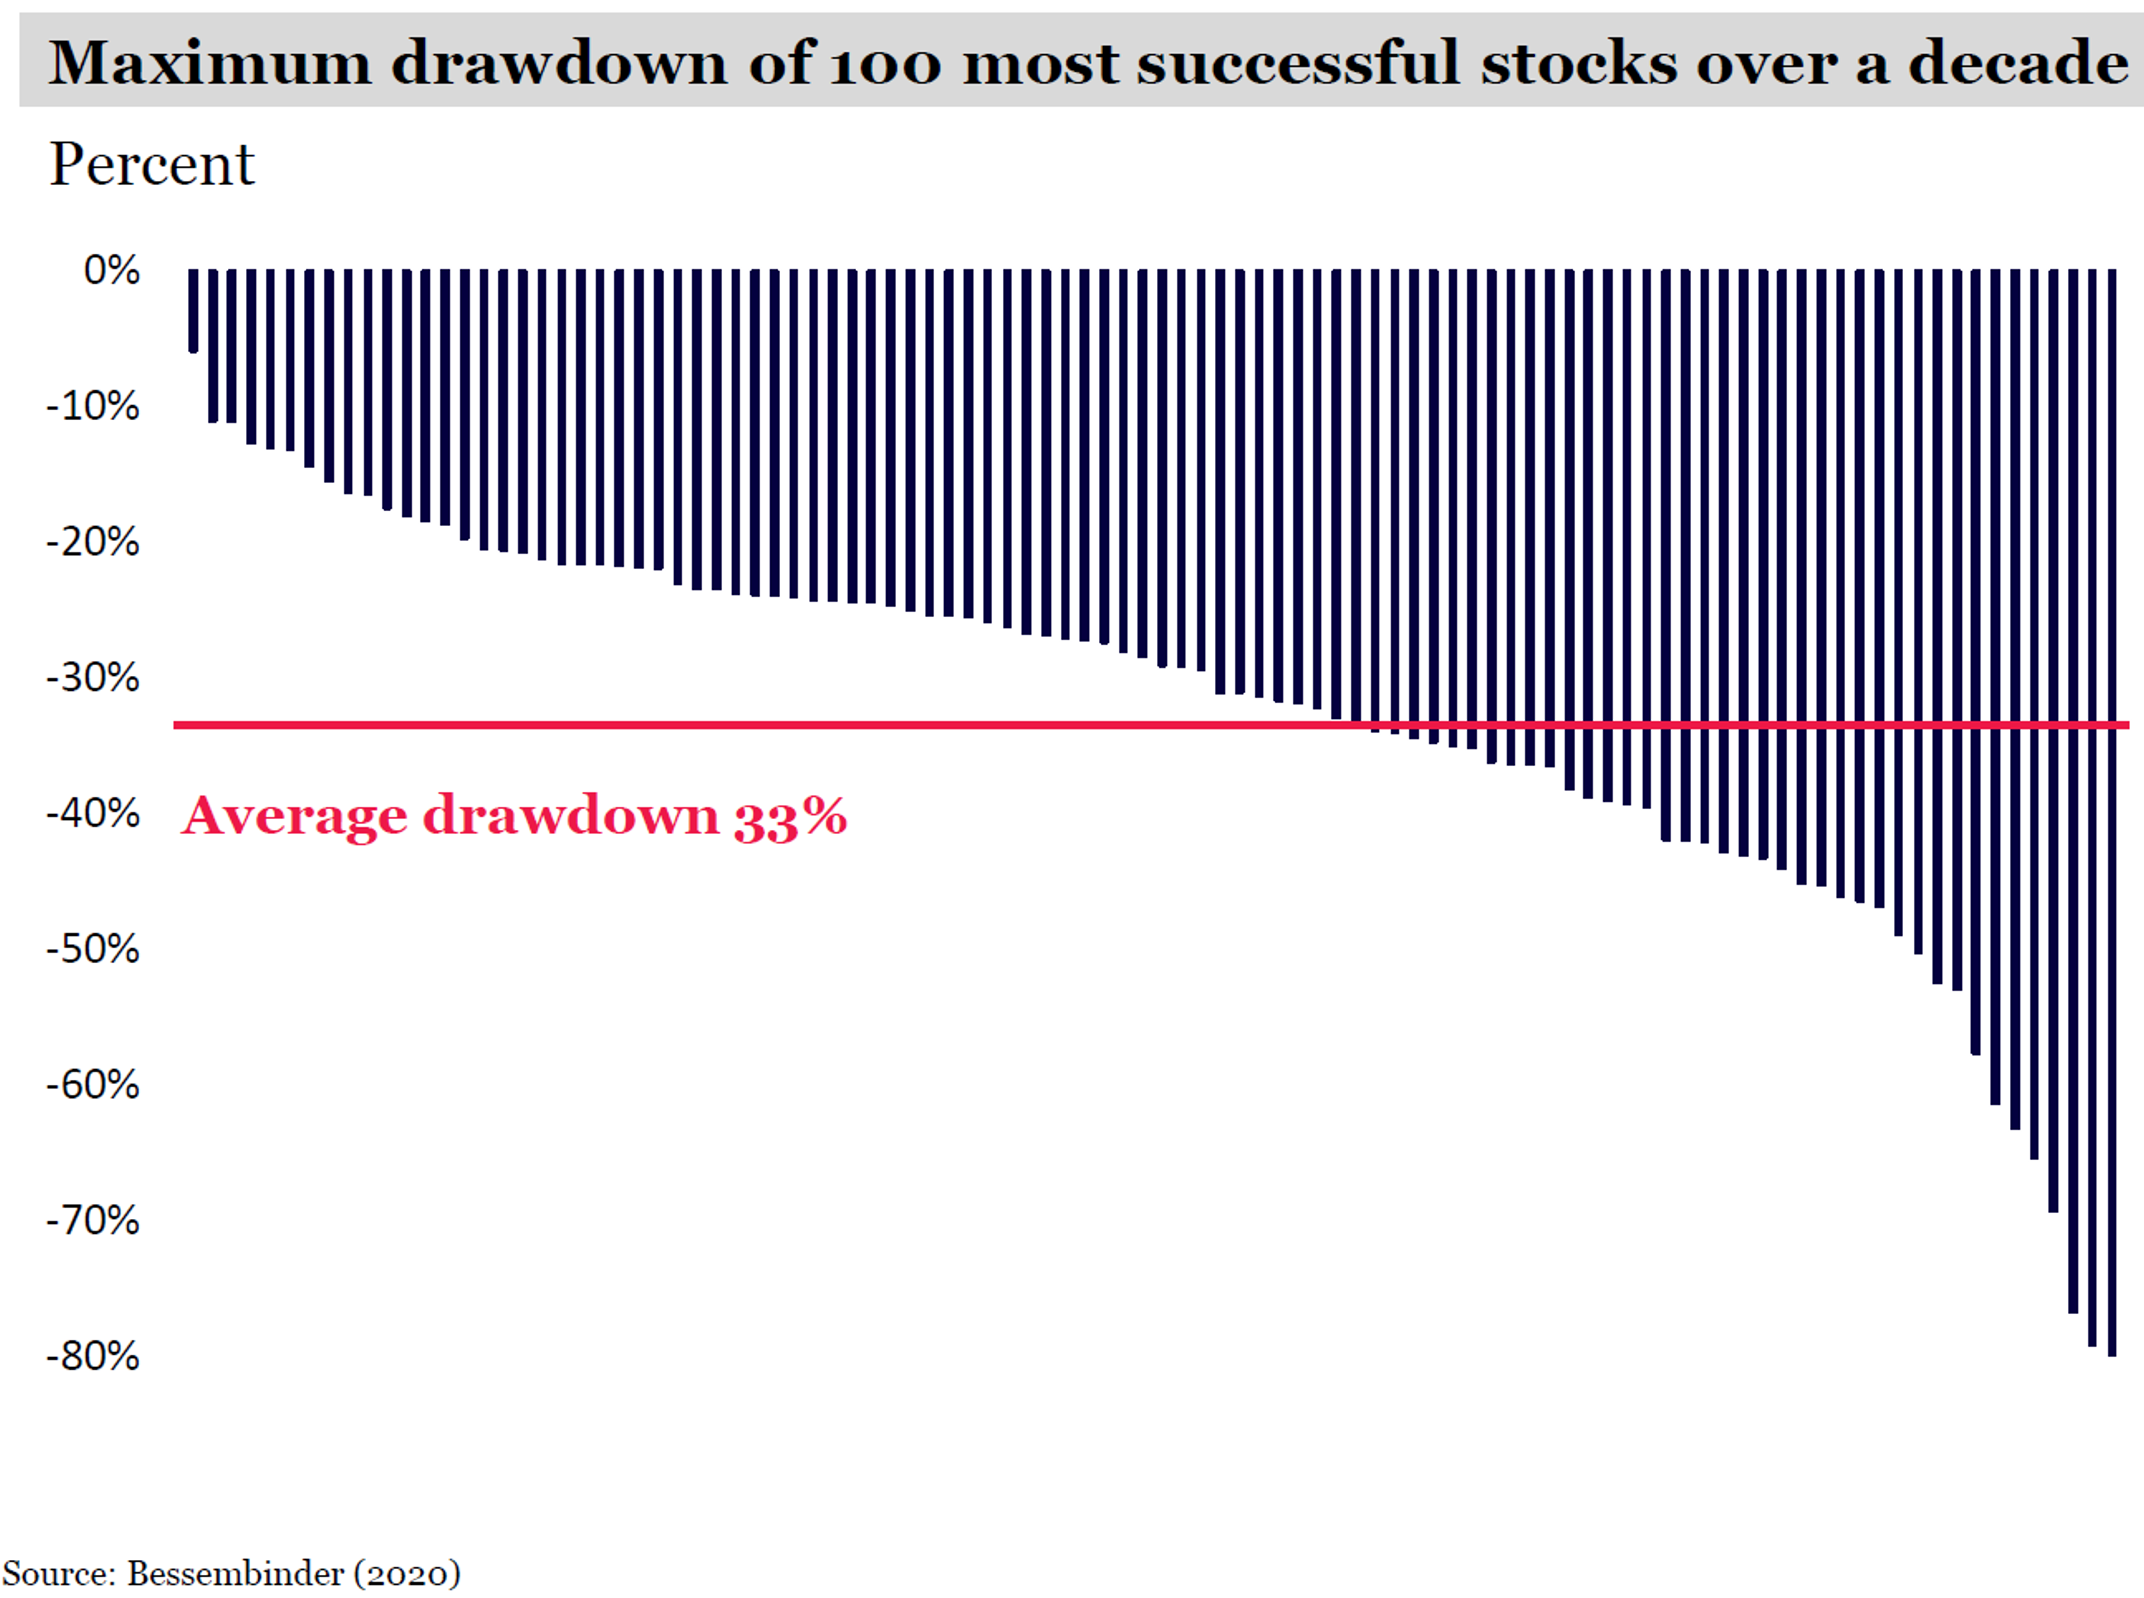 Max drawdown of 100 most successful stocks over a decade